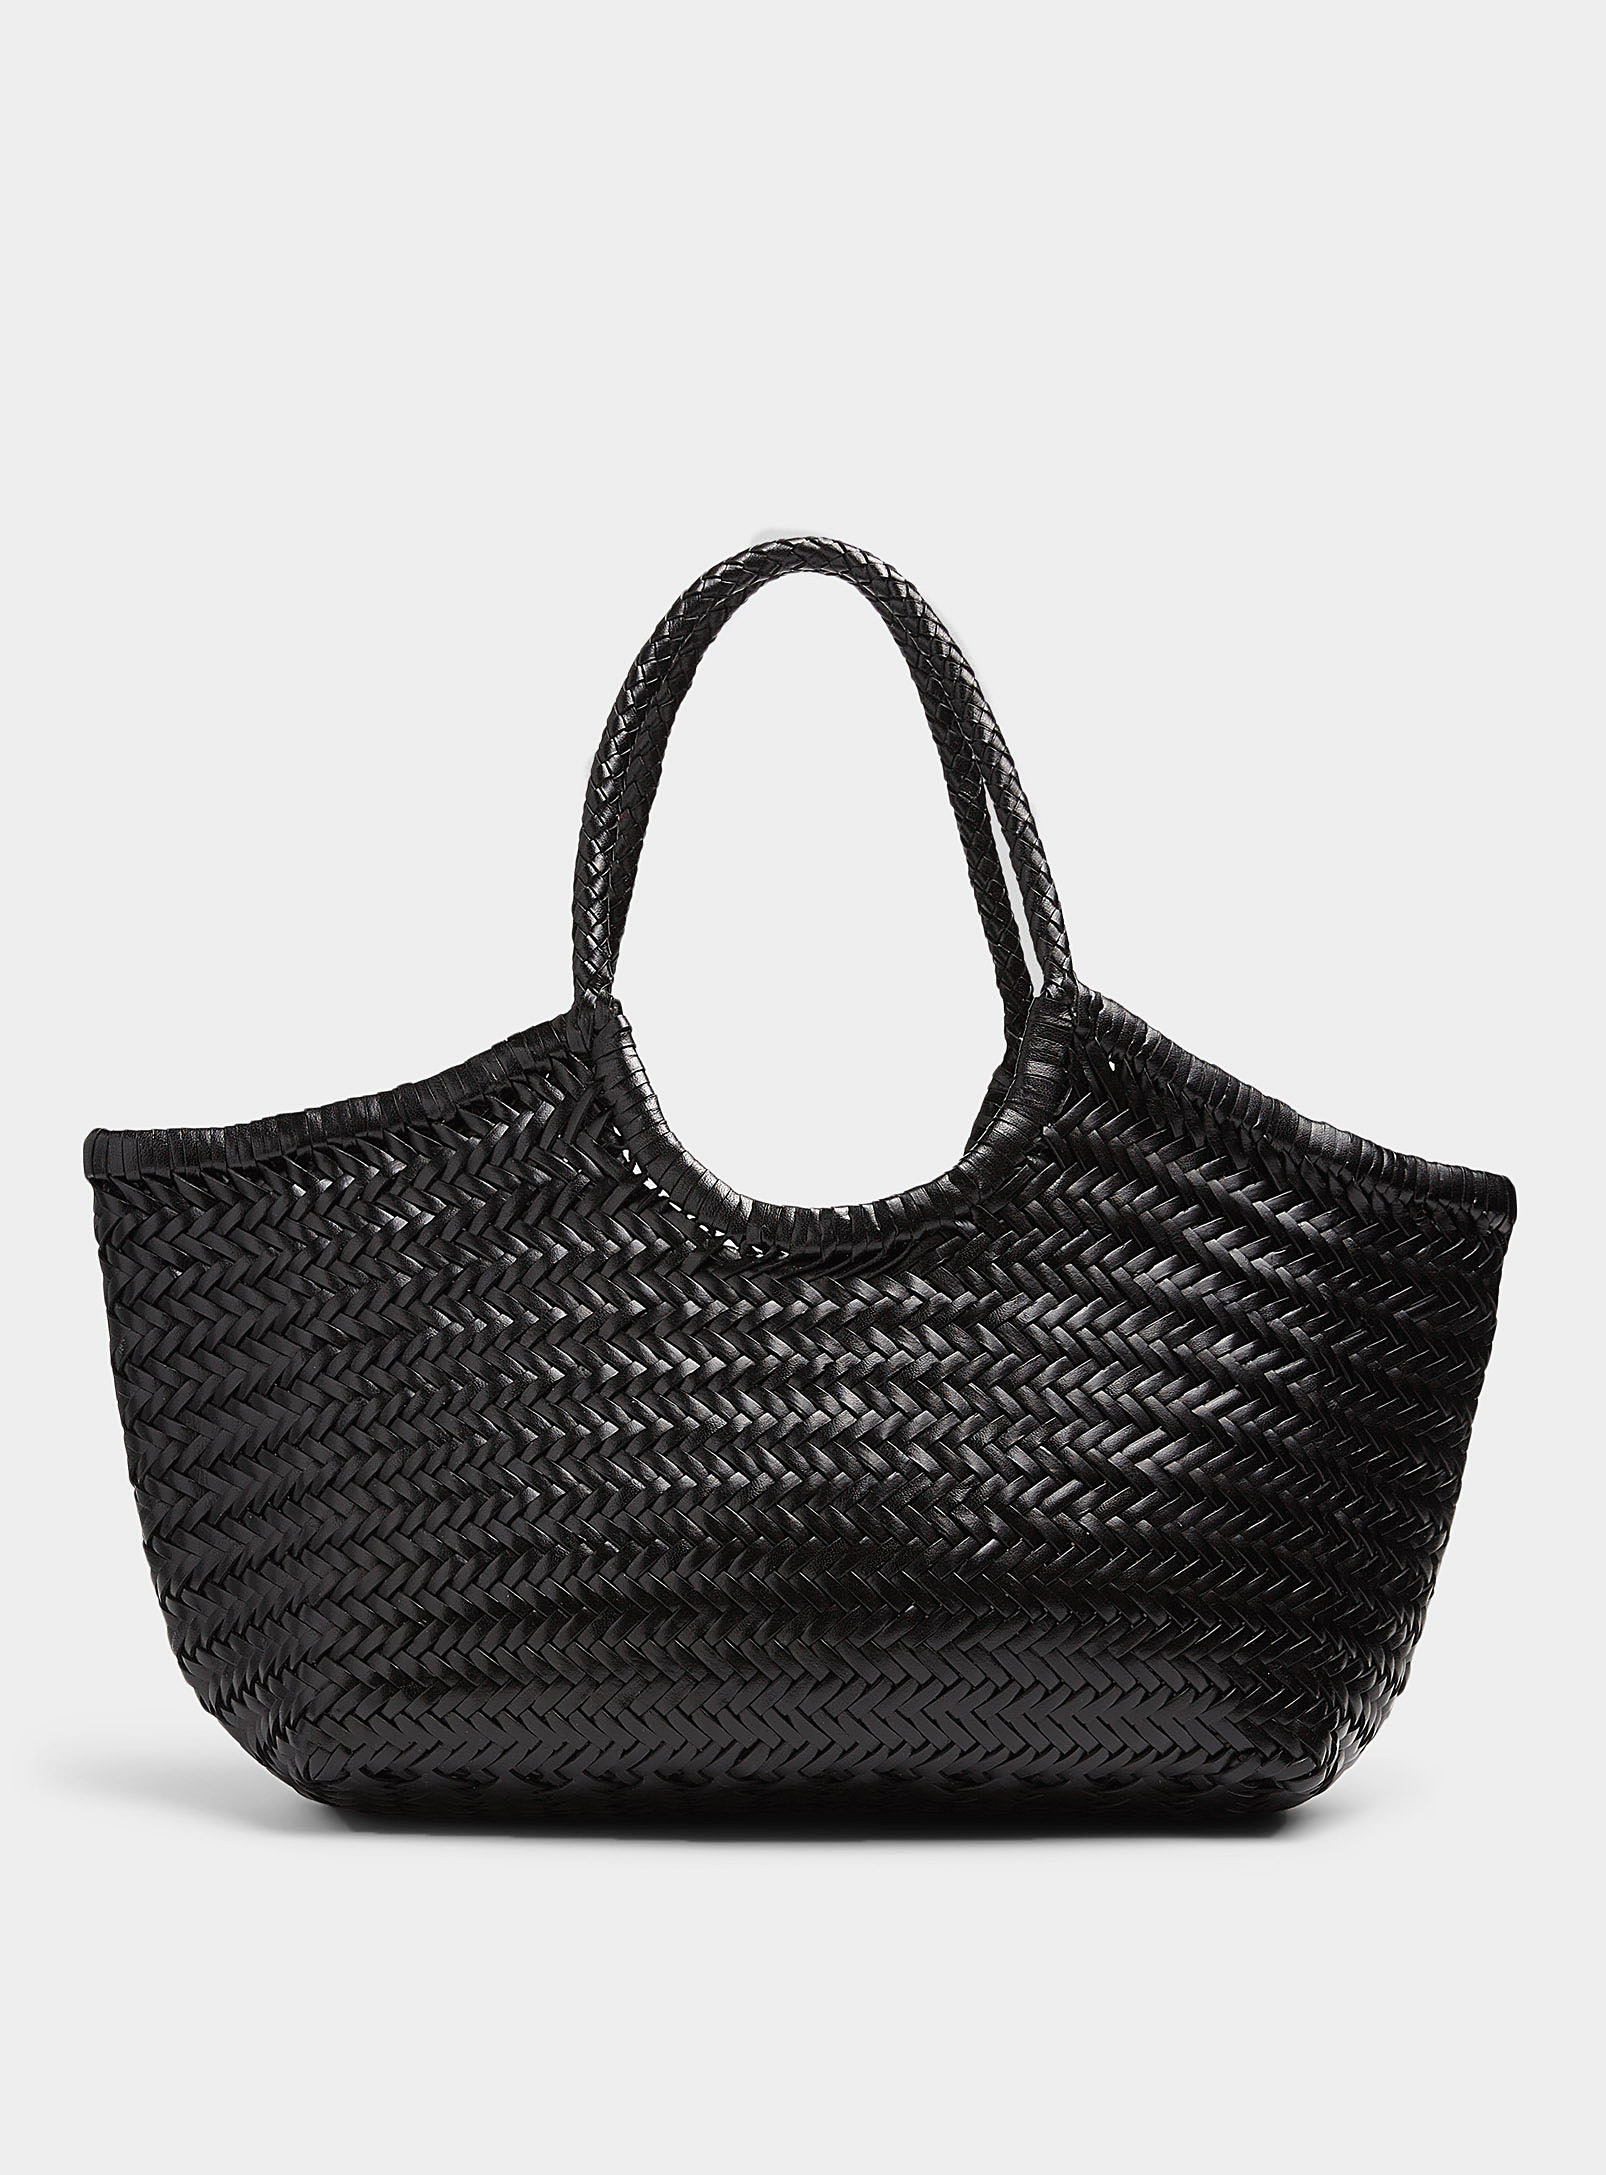 Dragon - Women's Nantucket braided leather large basket bag